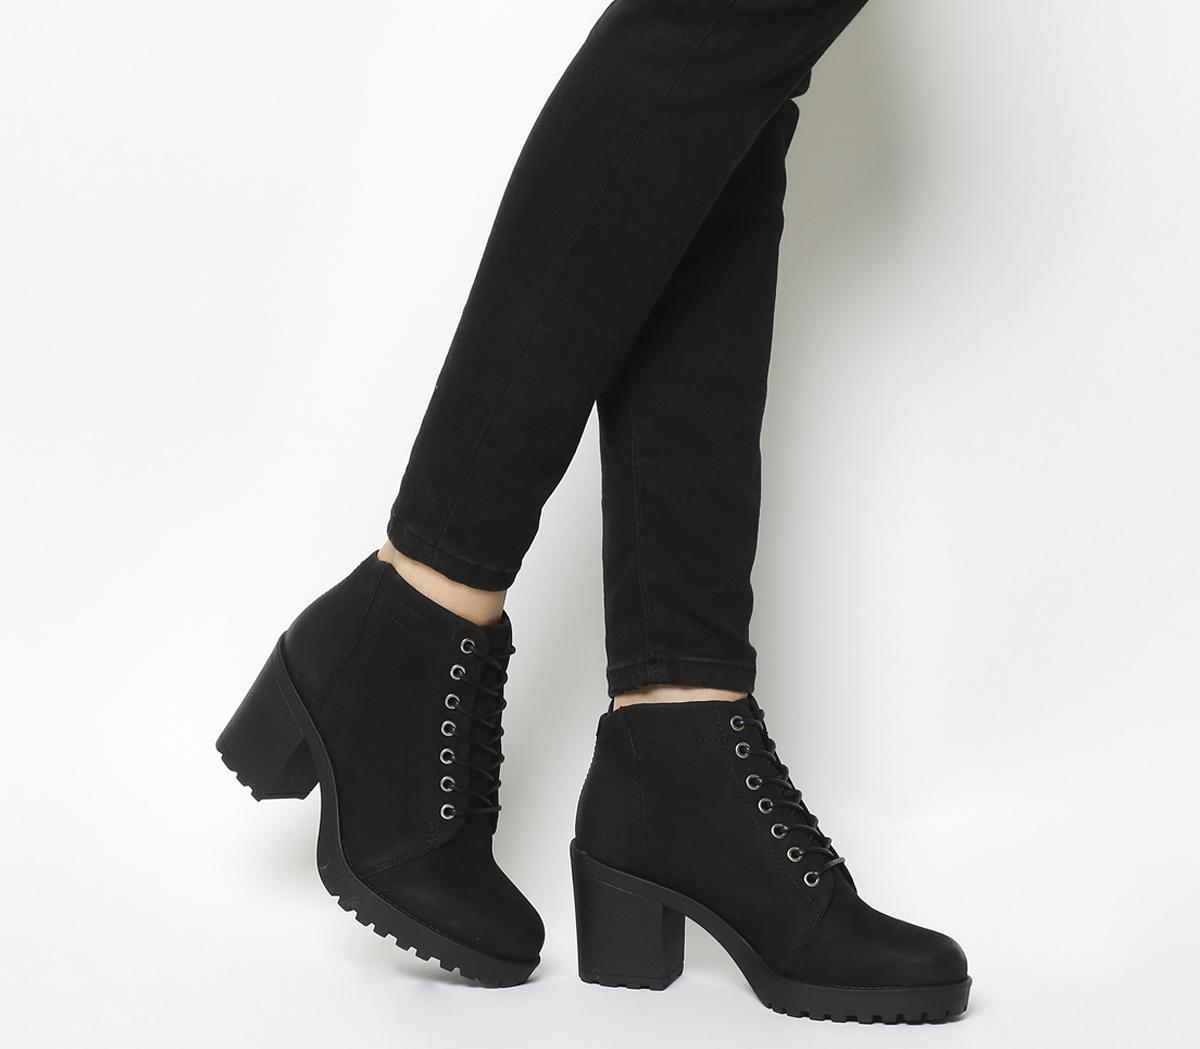 Vagabond Grace Lace Up Boots in Black 